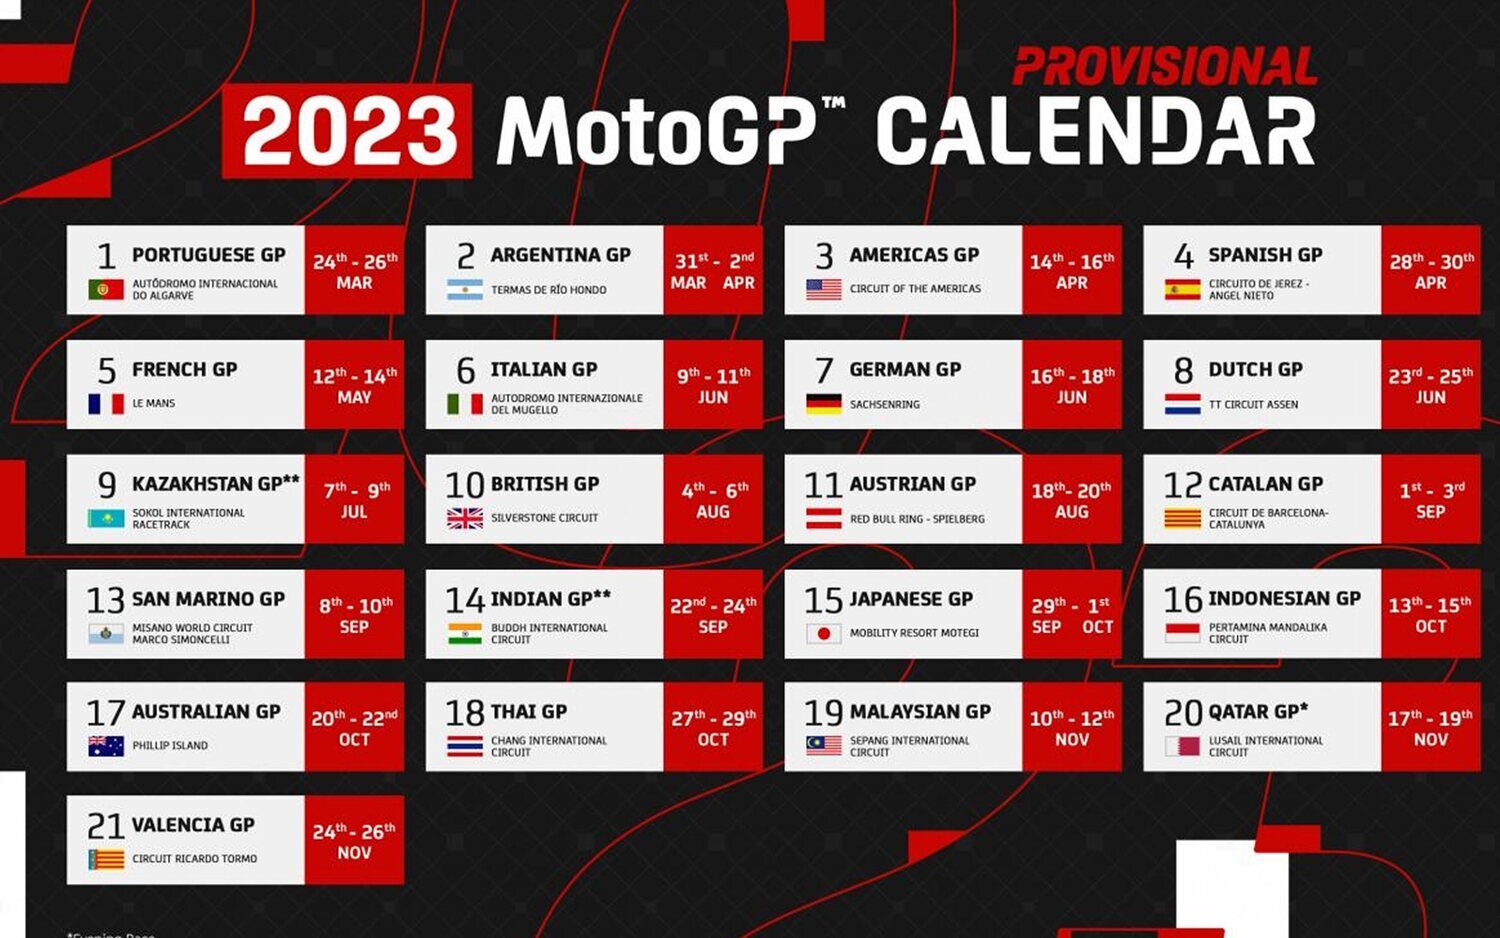 Calendario Provisional para MotoGP 2023